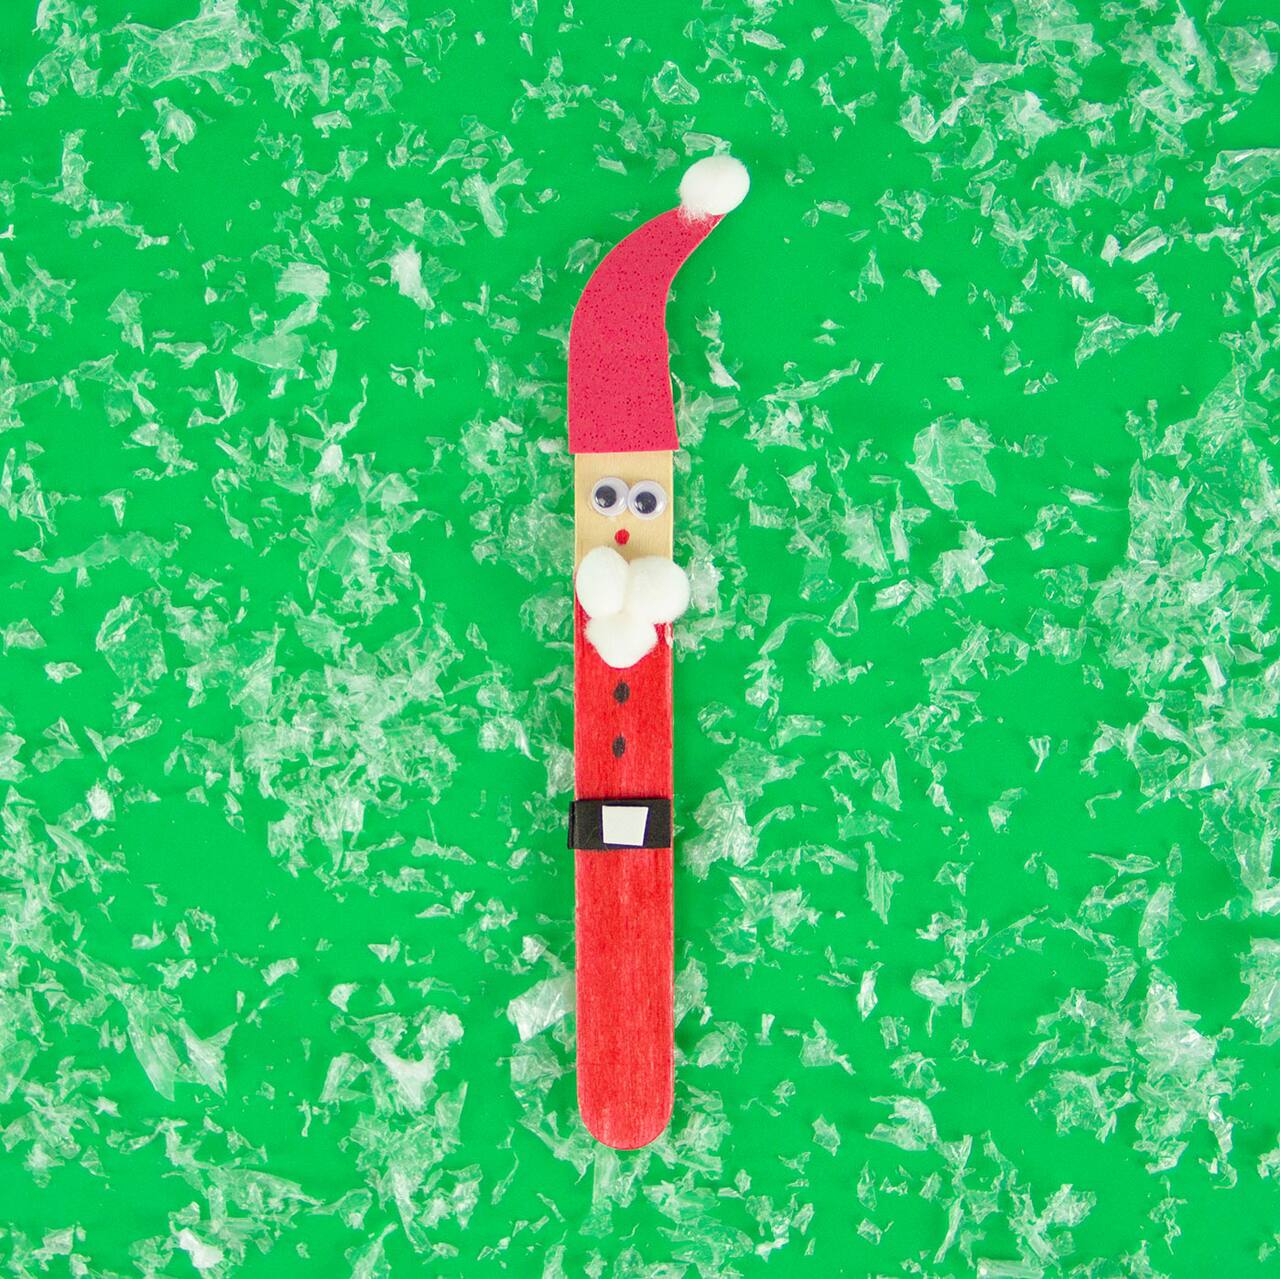 Craft Stick Santa